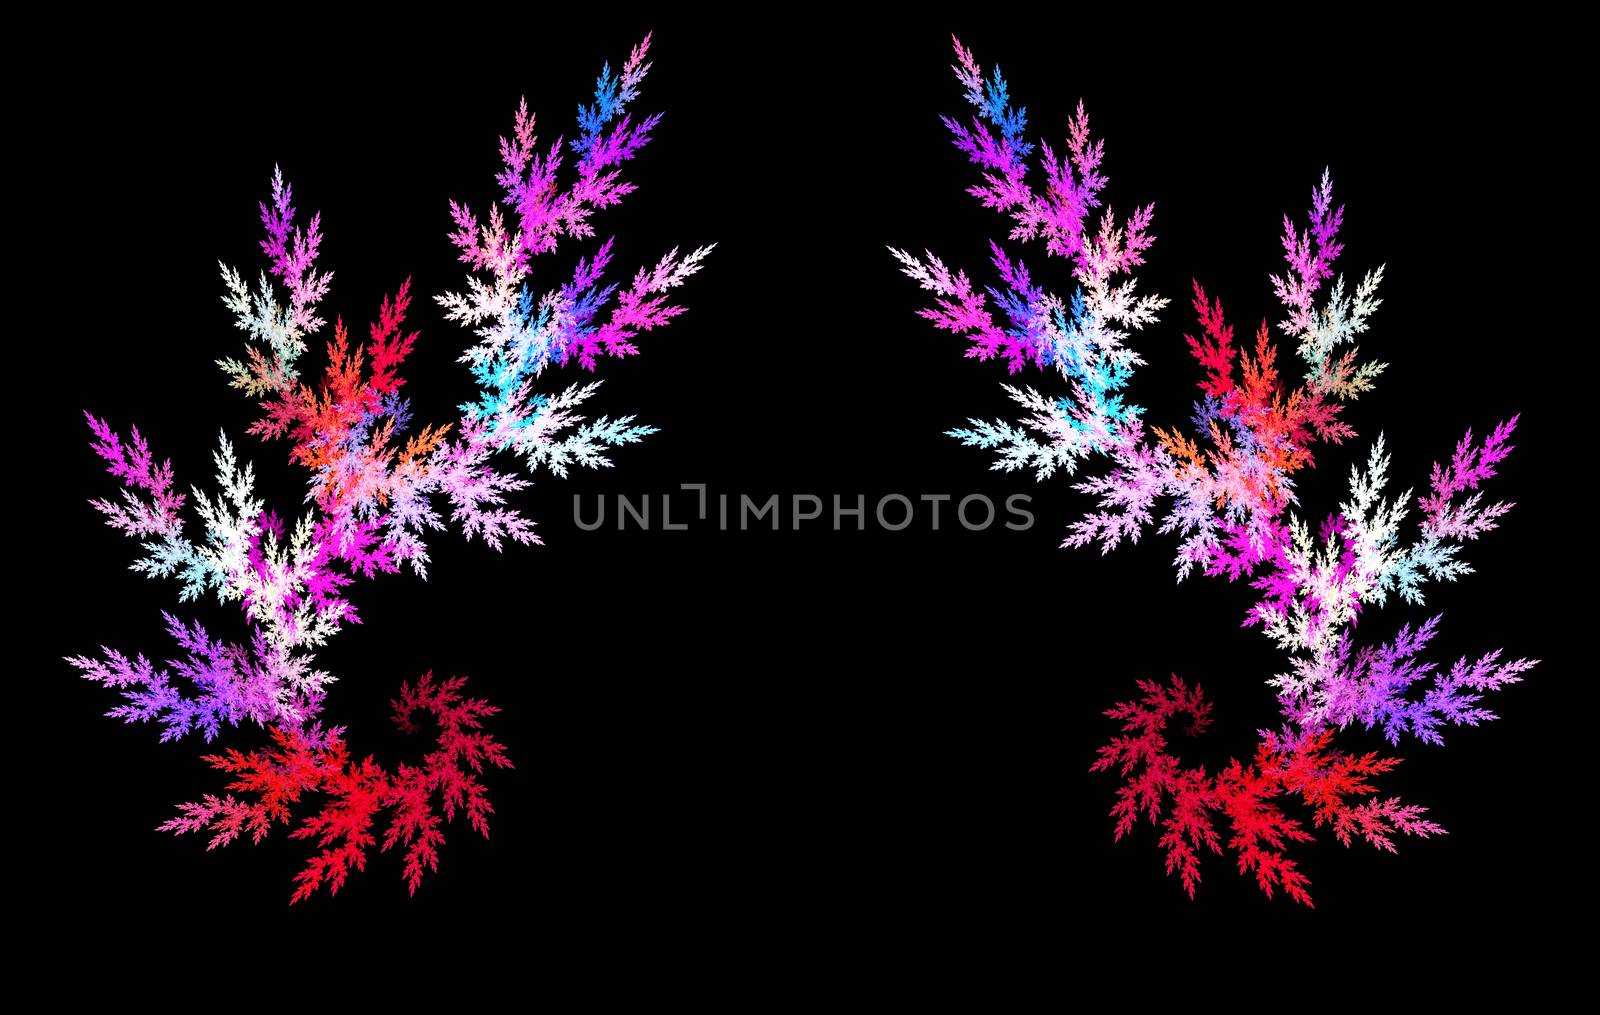 Multicolor fractal flower on black background. Computer generated graphics